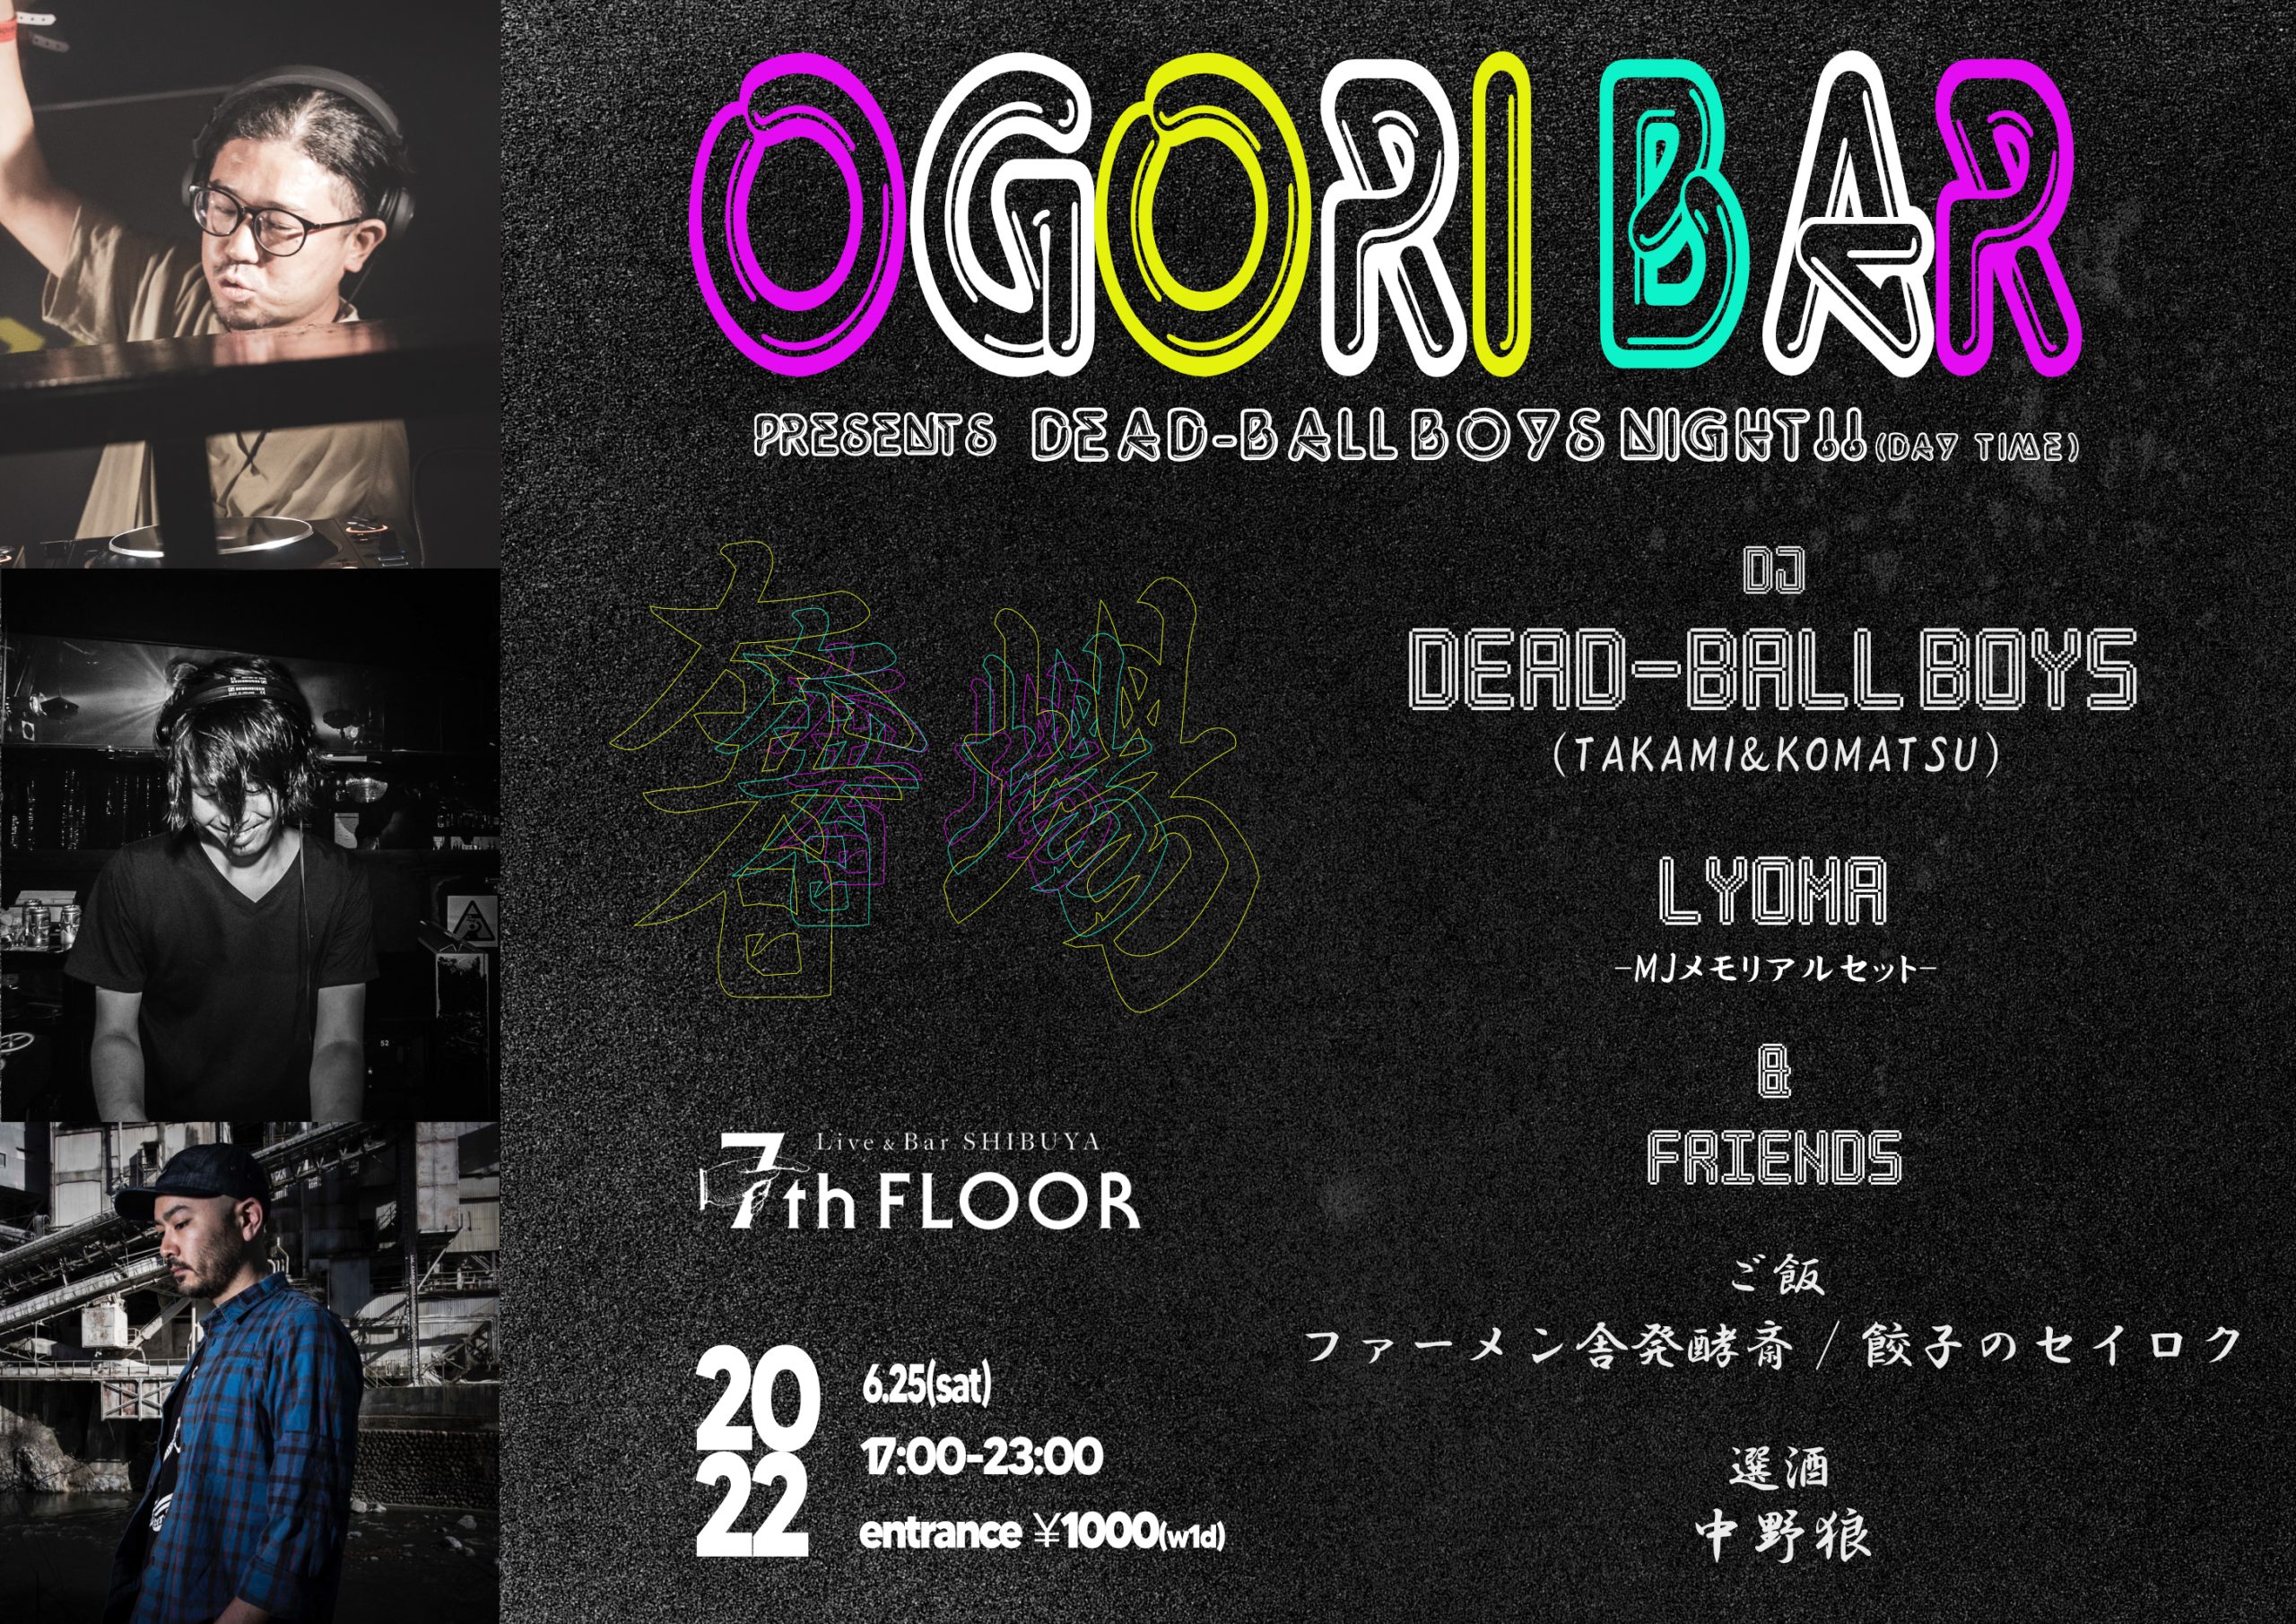 ogori bar presents dead-ball boys night!!(day time)